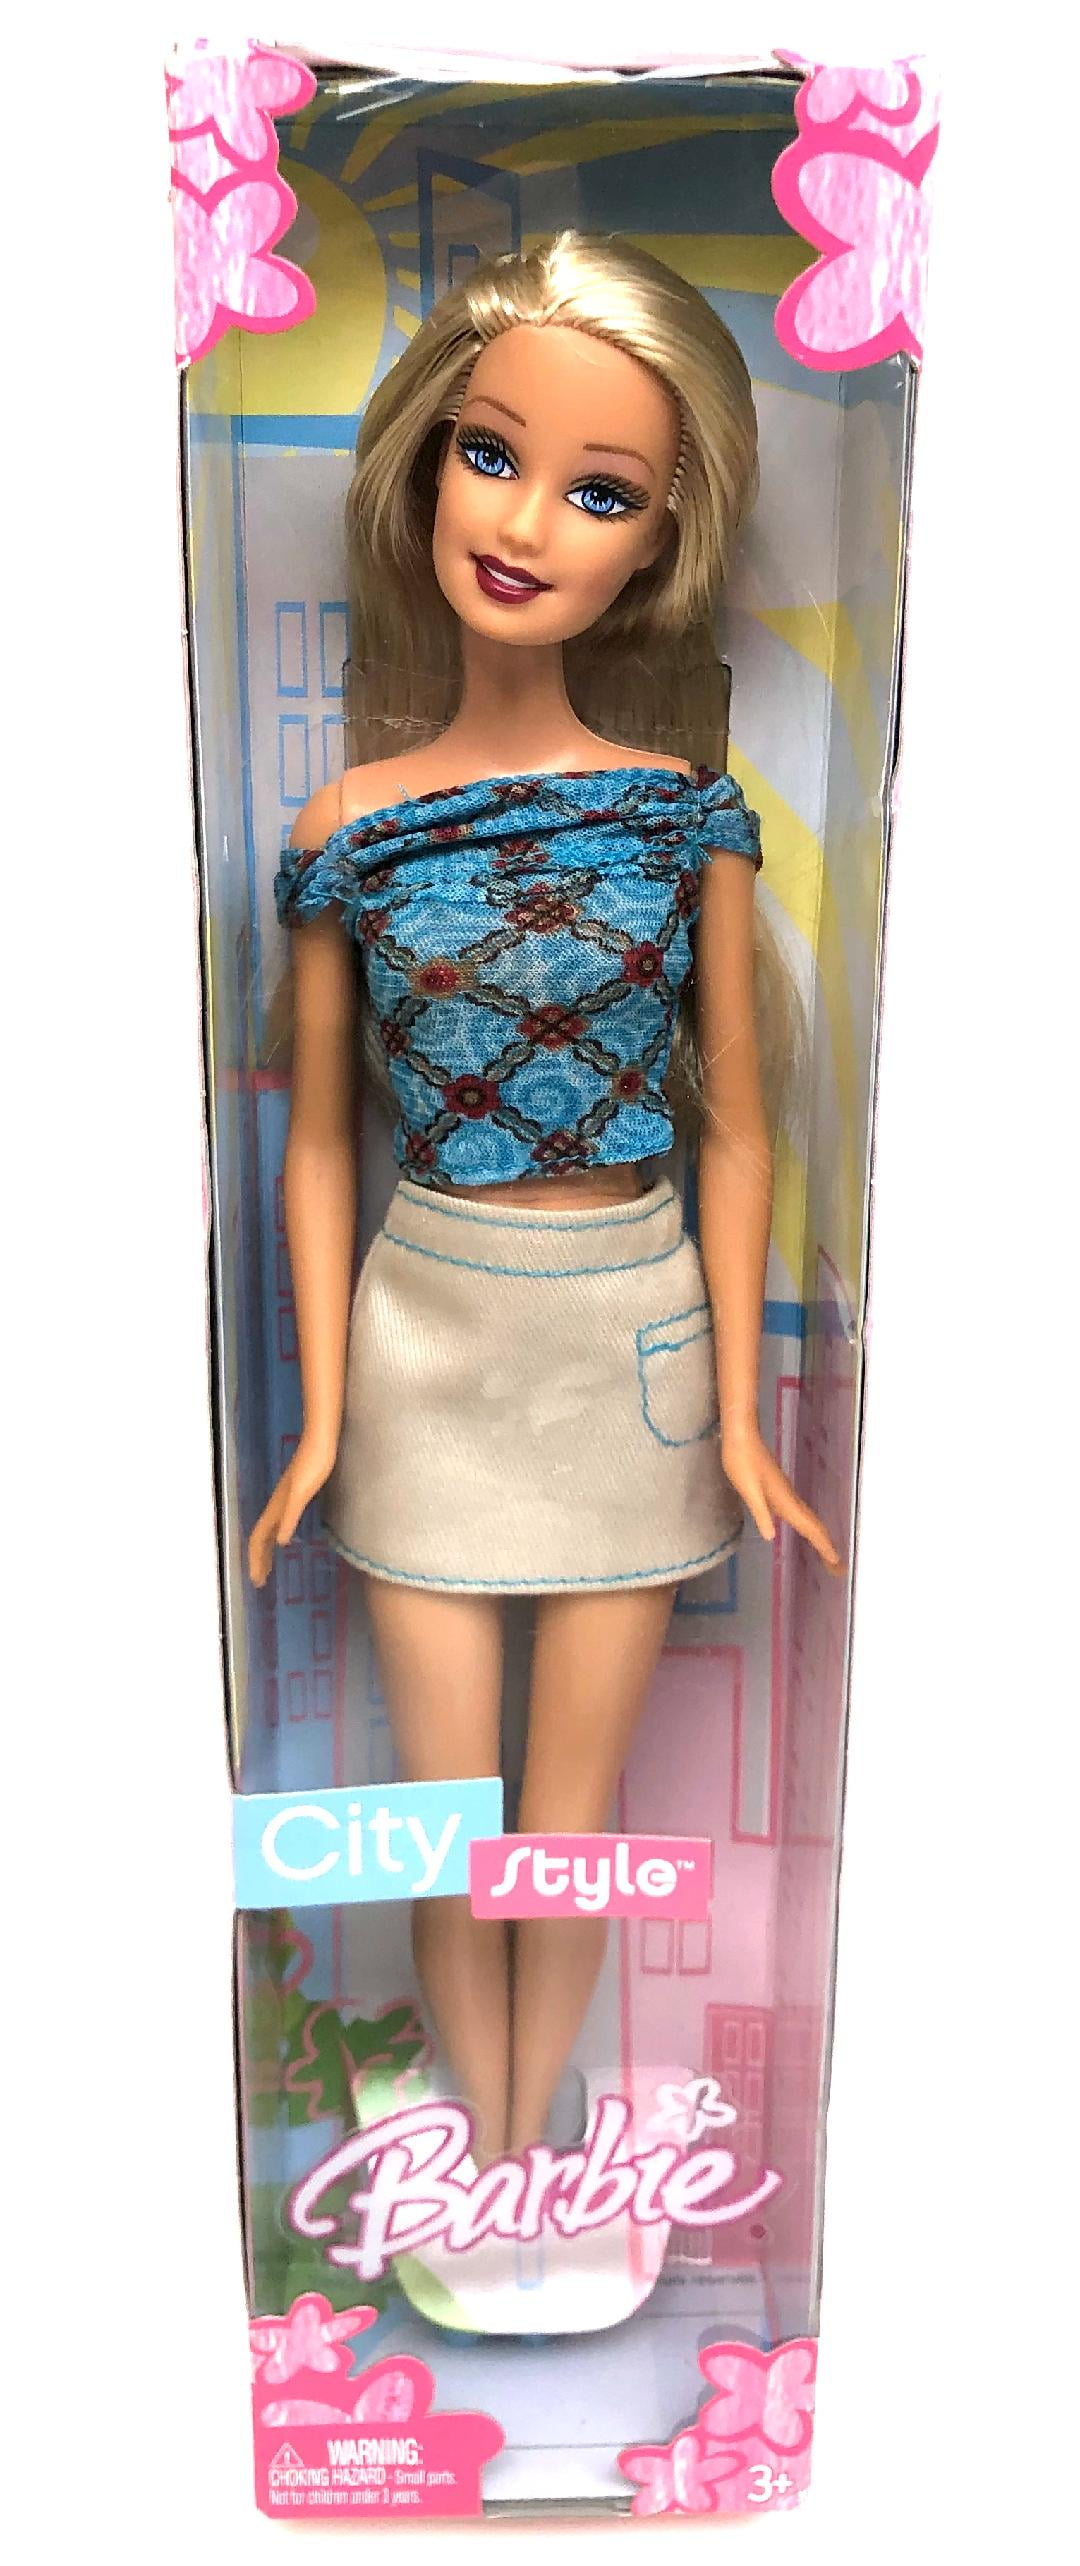 barbie 2005